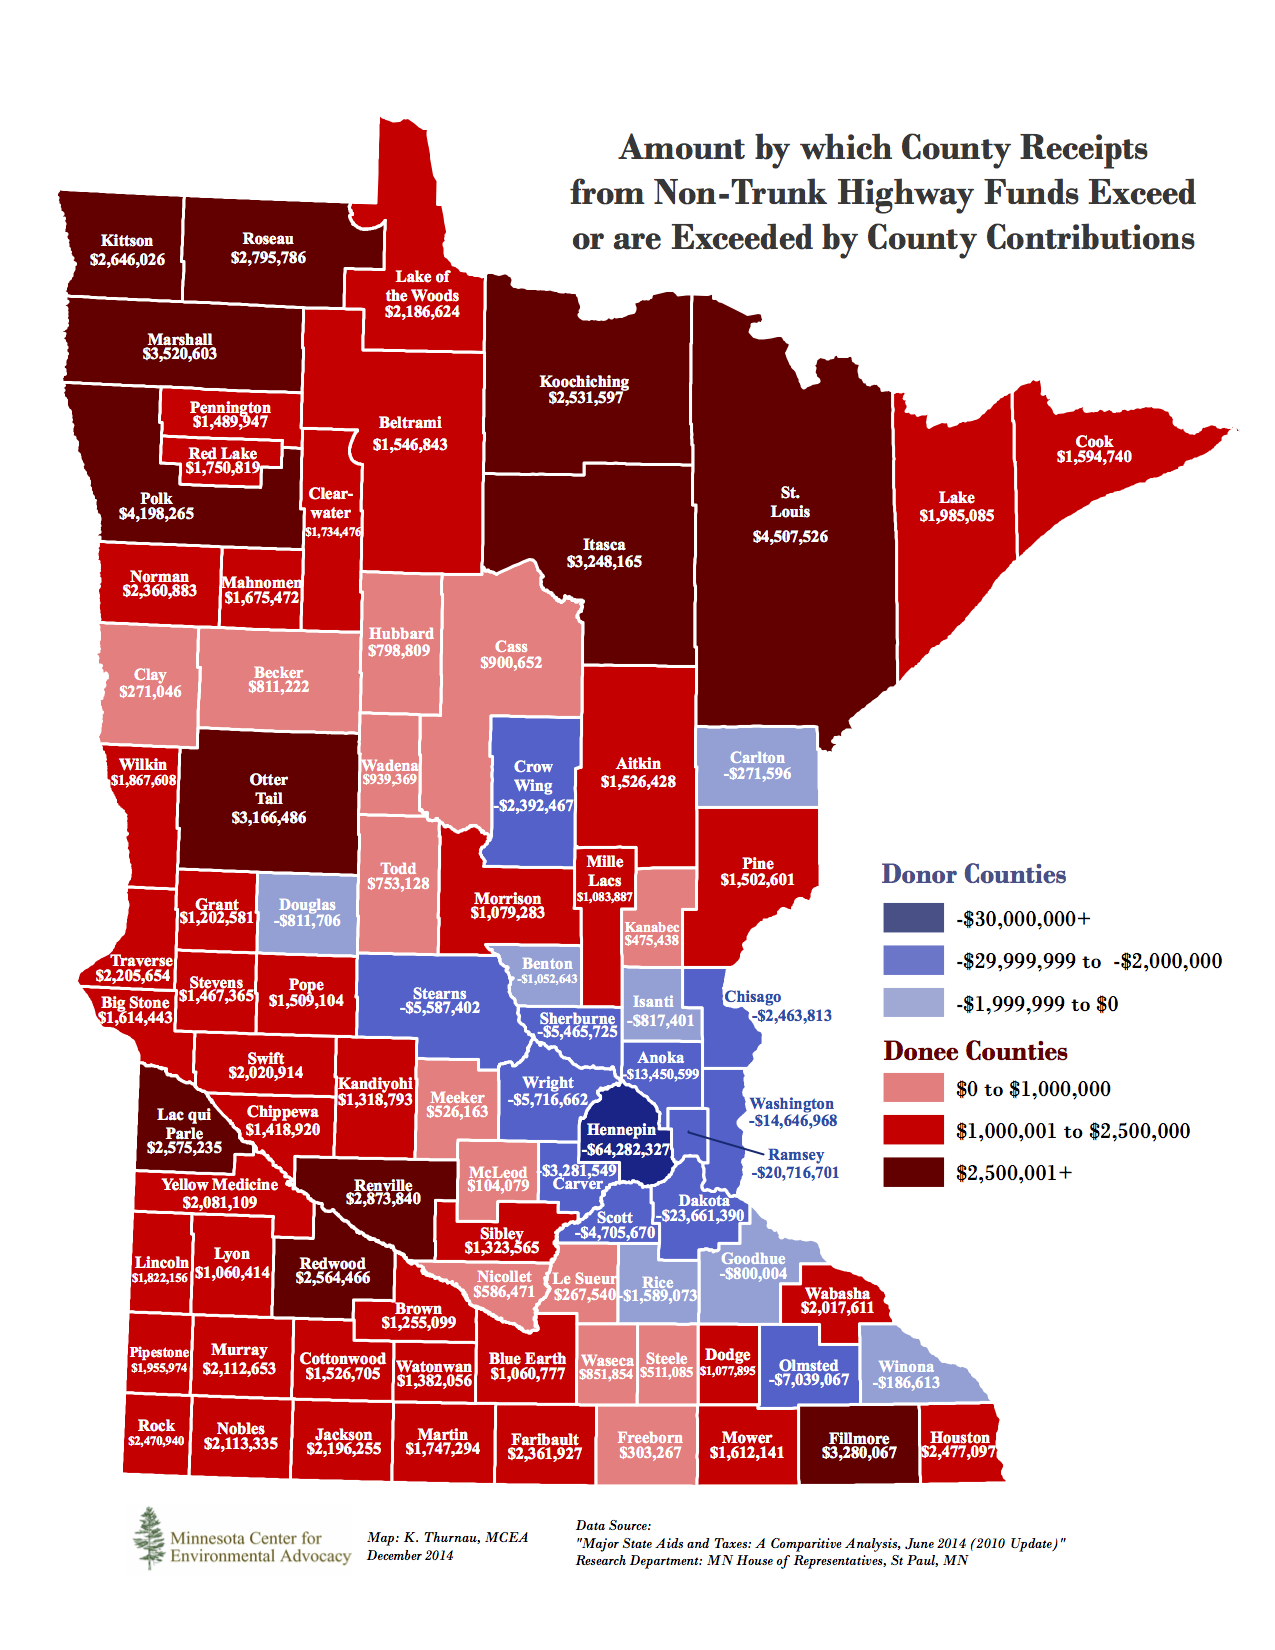 Minnesota County Donor-Donee Transportation Map